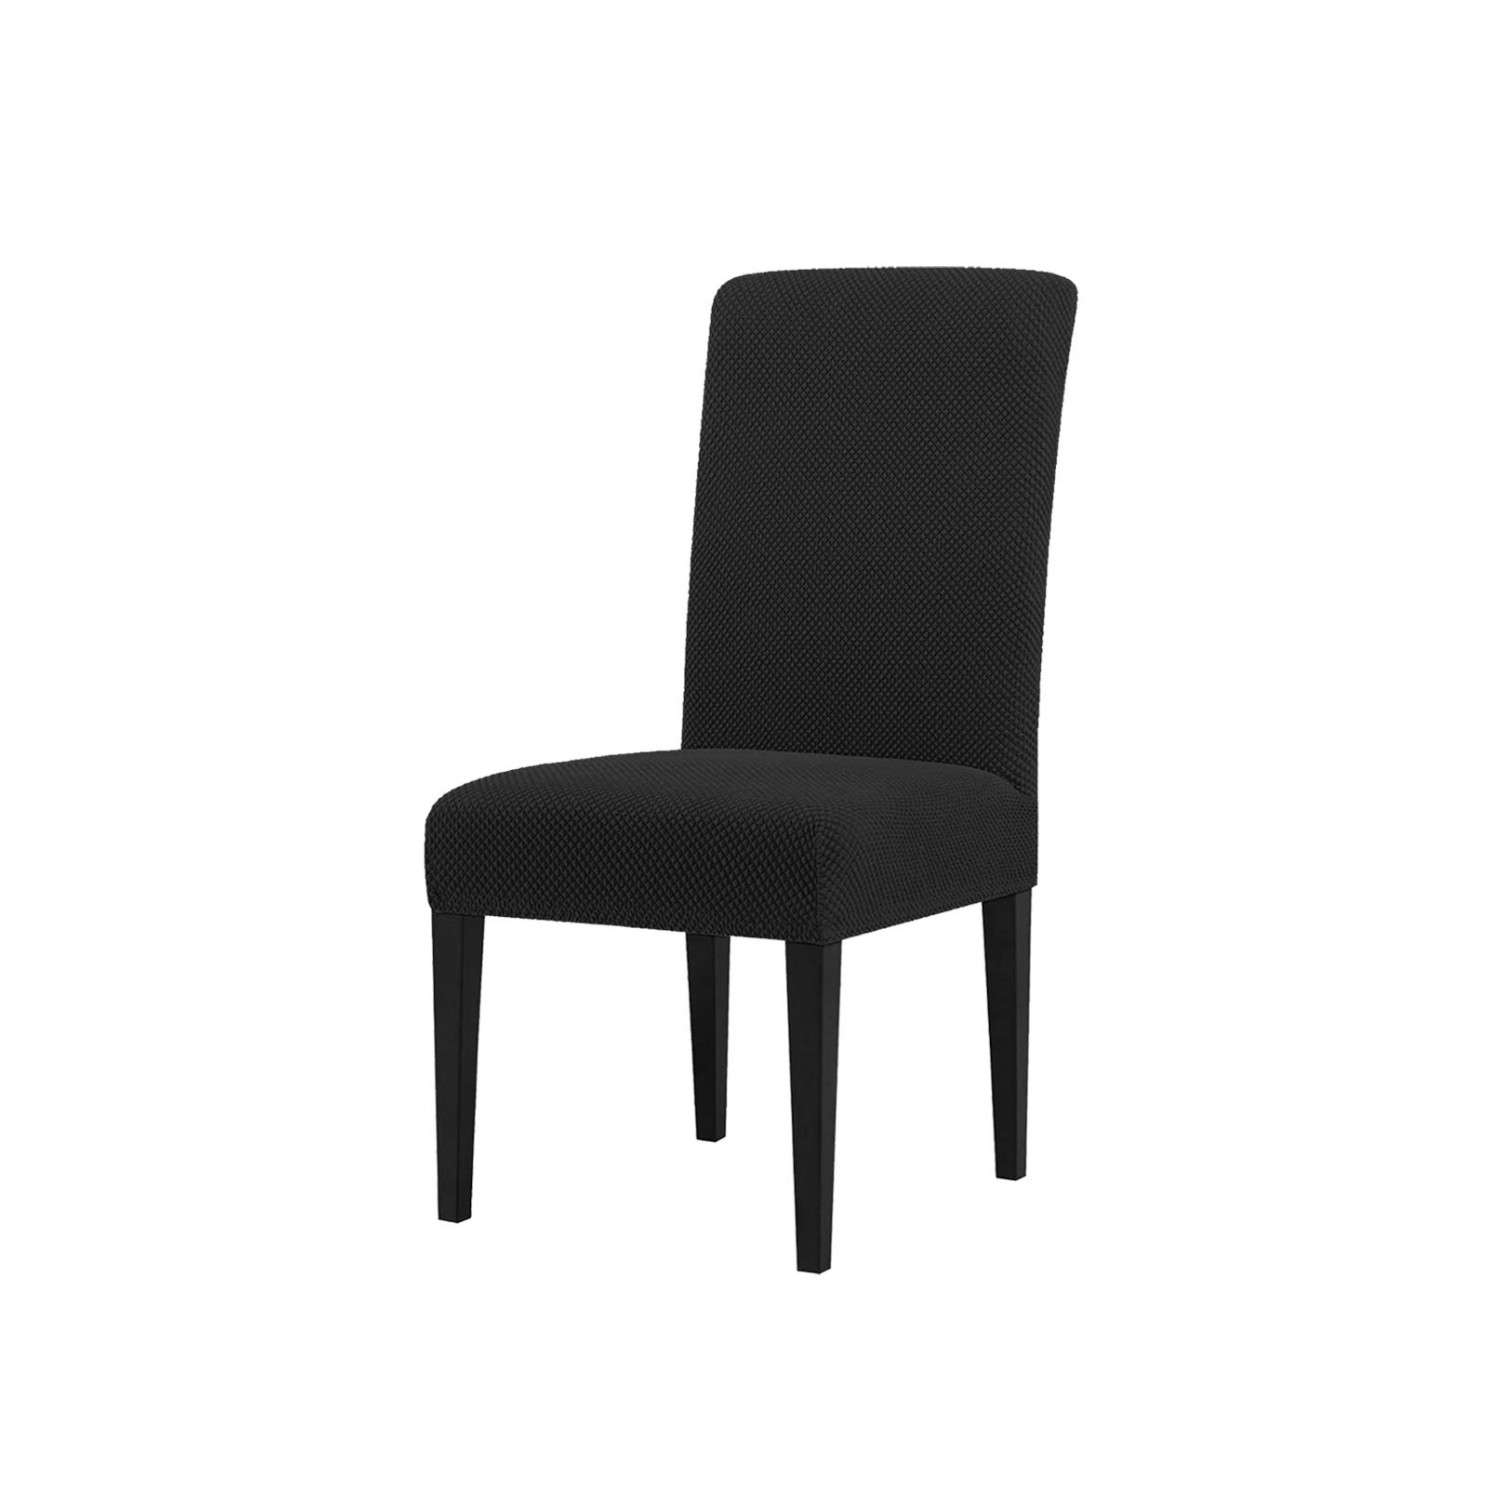 Чехол на стул LuxAlto Коллекция Fukra oval черный - фото 1